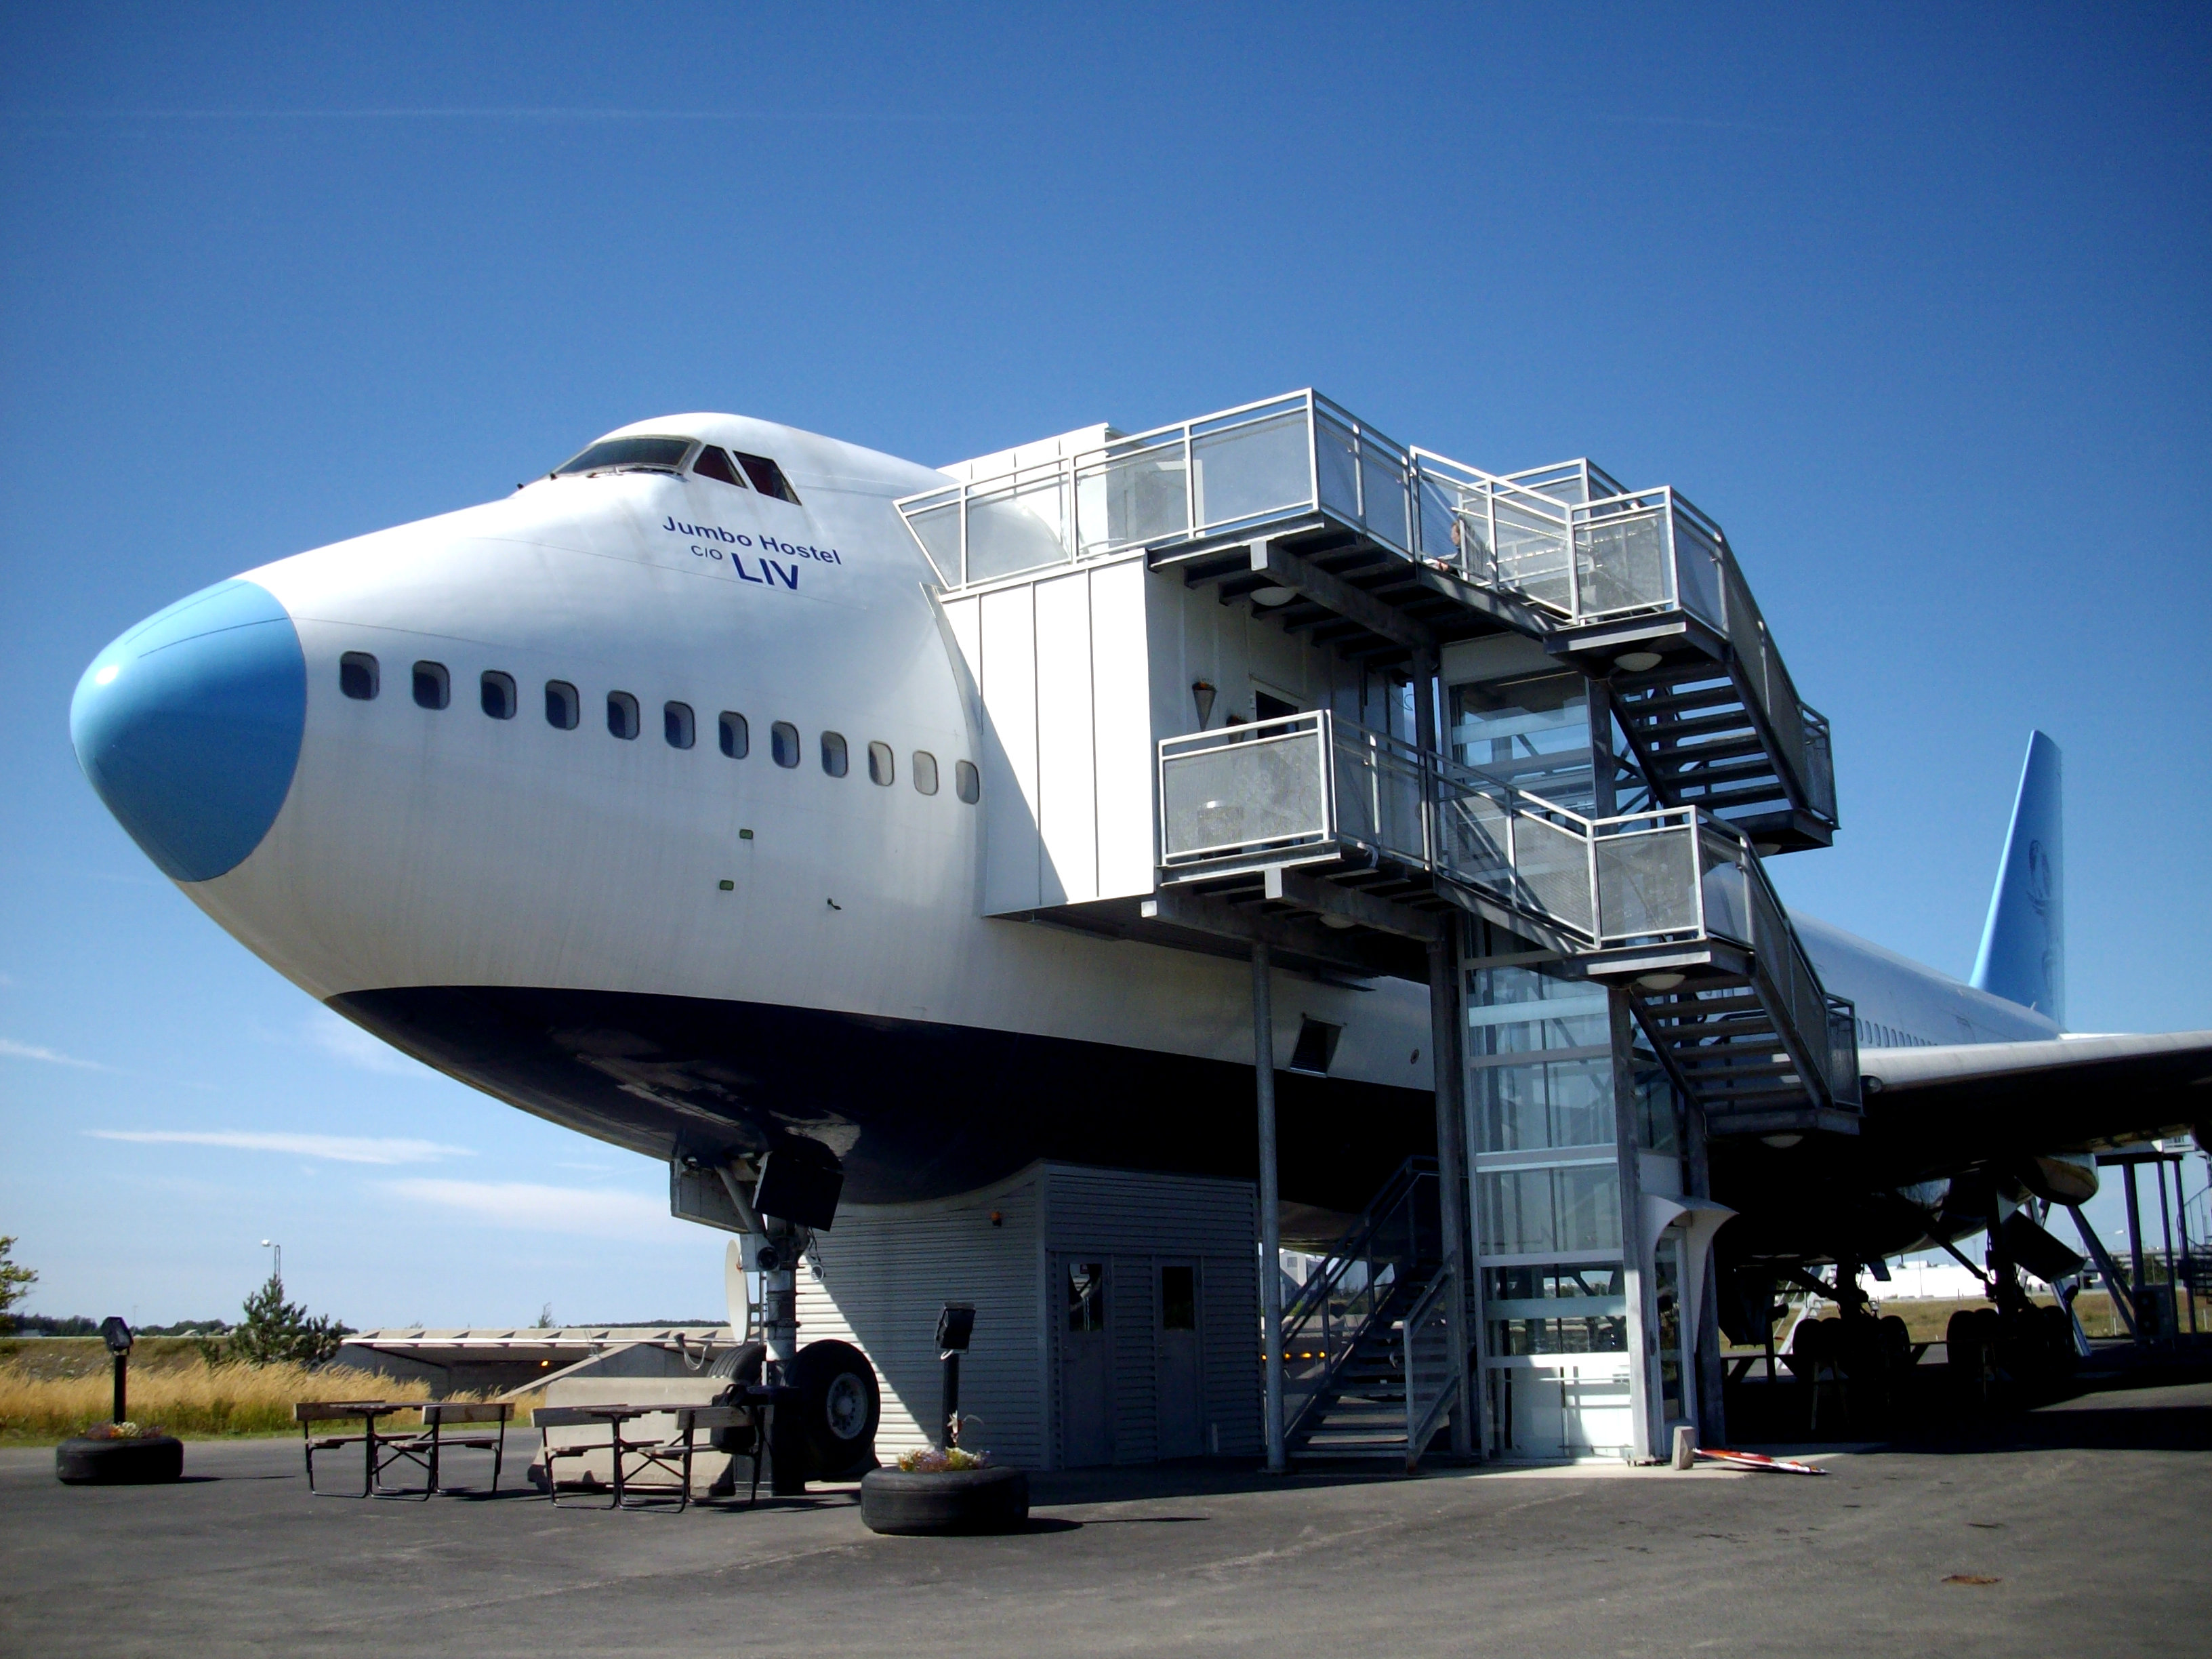 Хостел Pecture в Стокгольме предлагает размещение на борту самолета Jumbo Jet